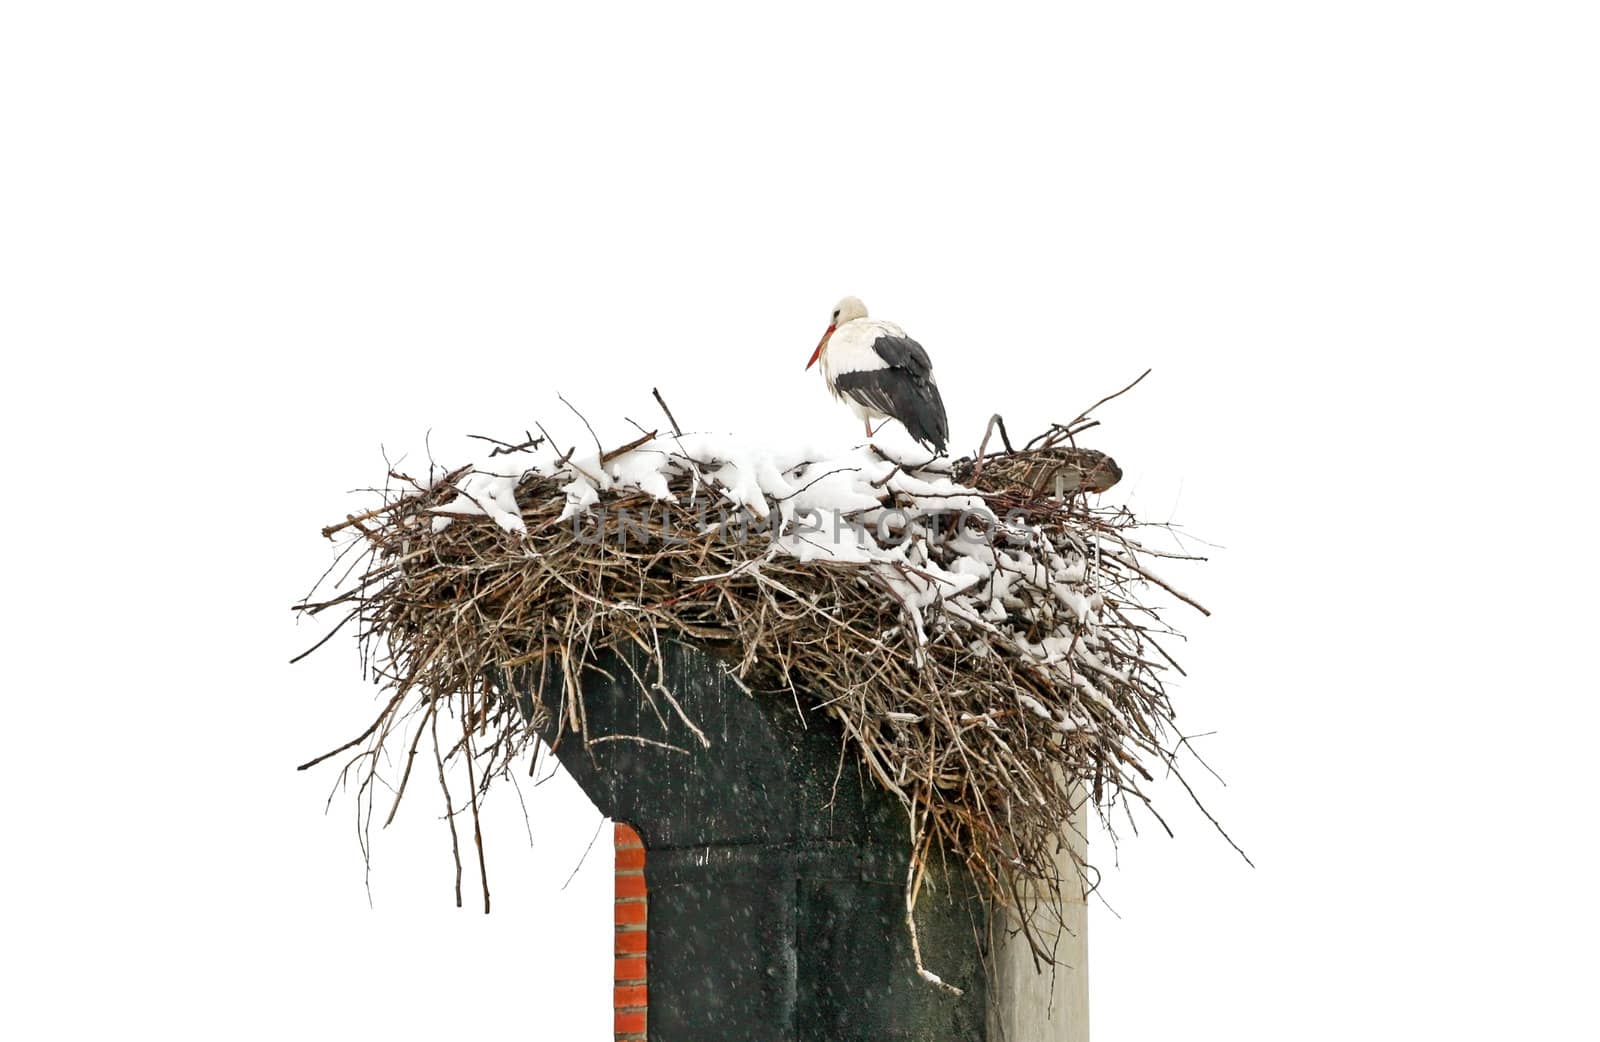 Stork by renegadewanderer